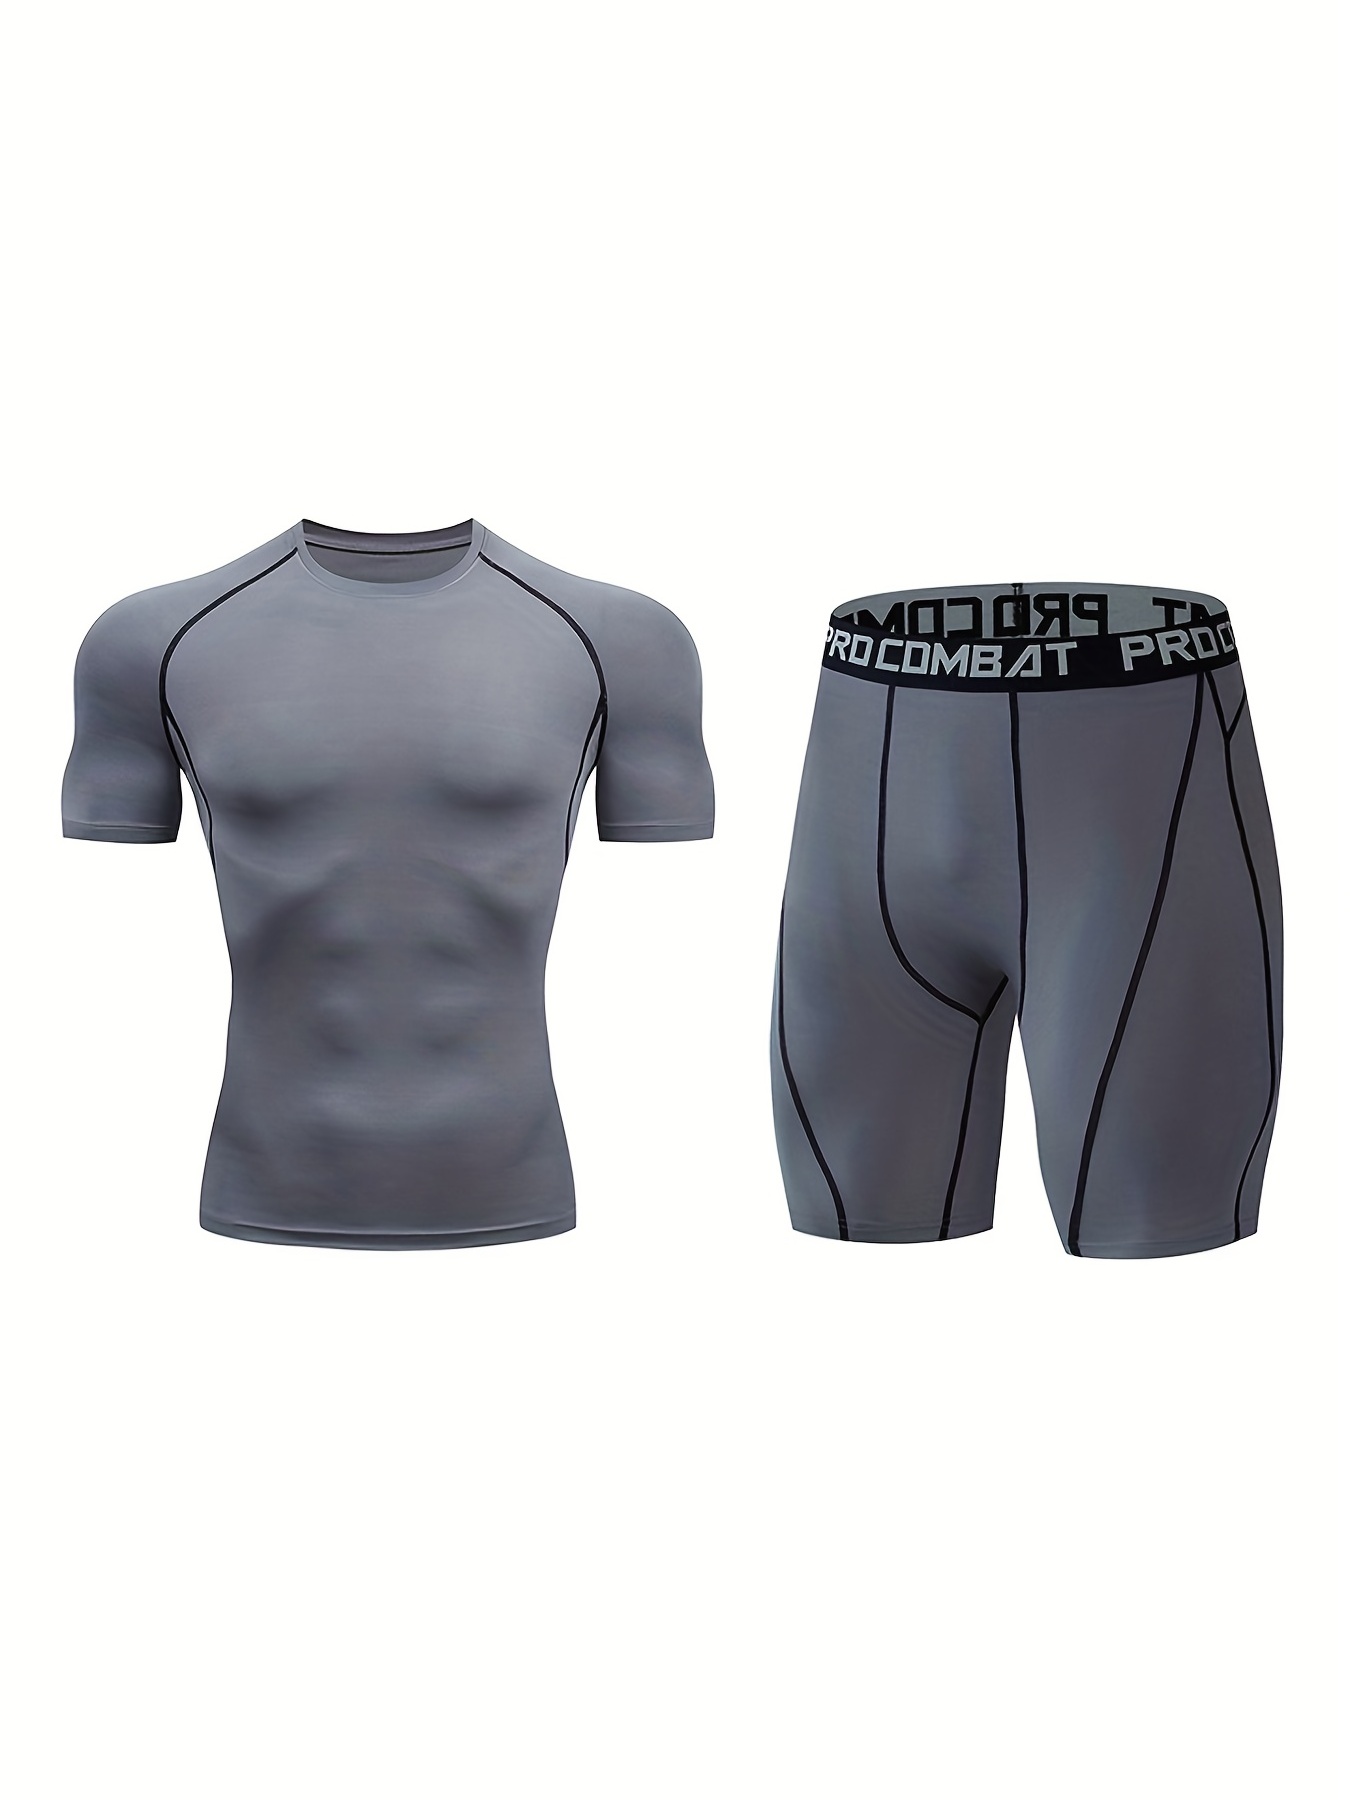 Under Armour - Camiseta de compresión interior deportiva para hombre, talla  M, color negro